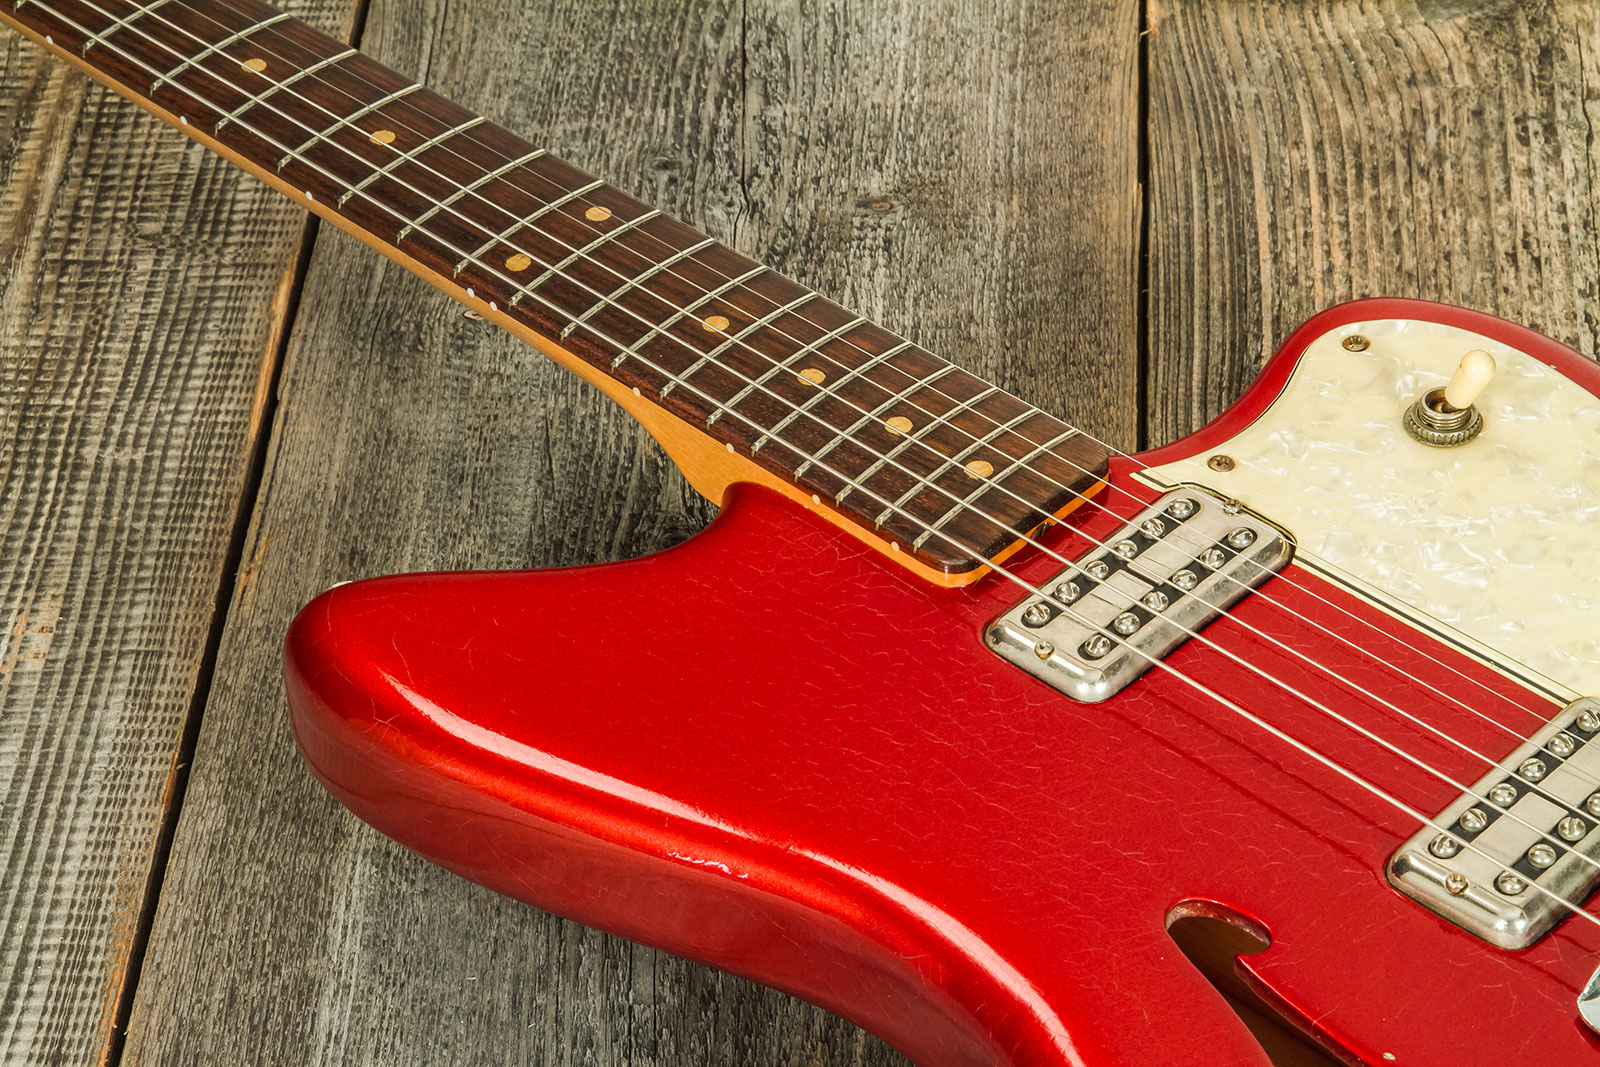 Rebelrelic Wrangler 2h Trem Rw #62175 - Light Aged Candy Apple Red - Semi hollow elektriche gitaar - Variation 3